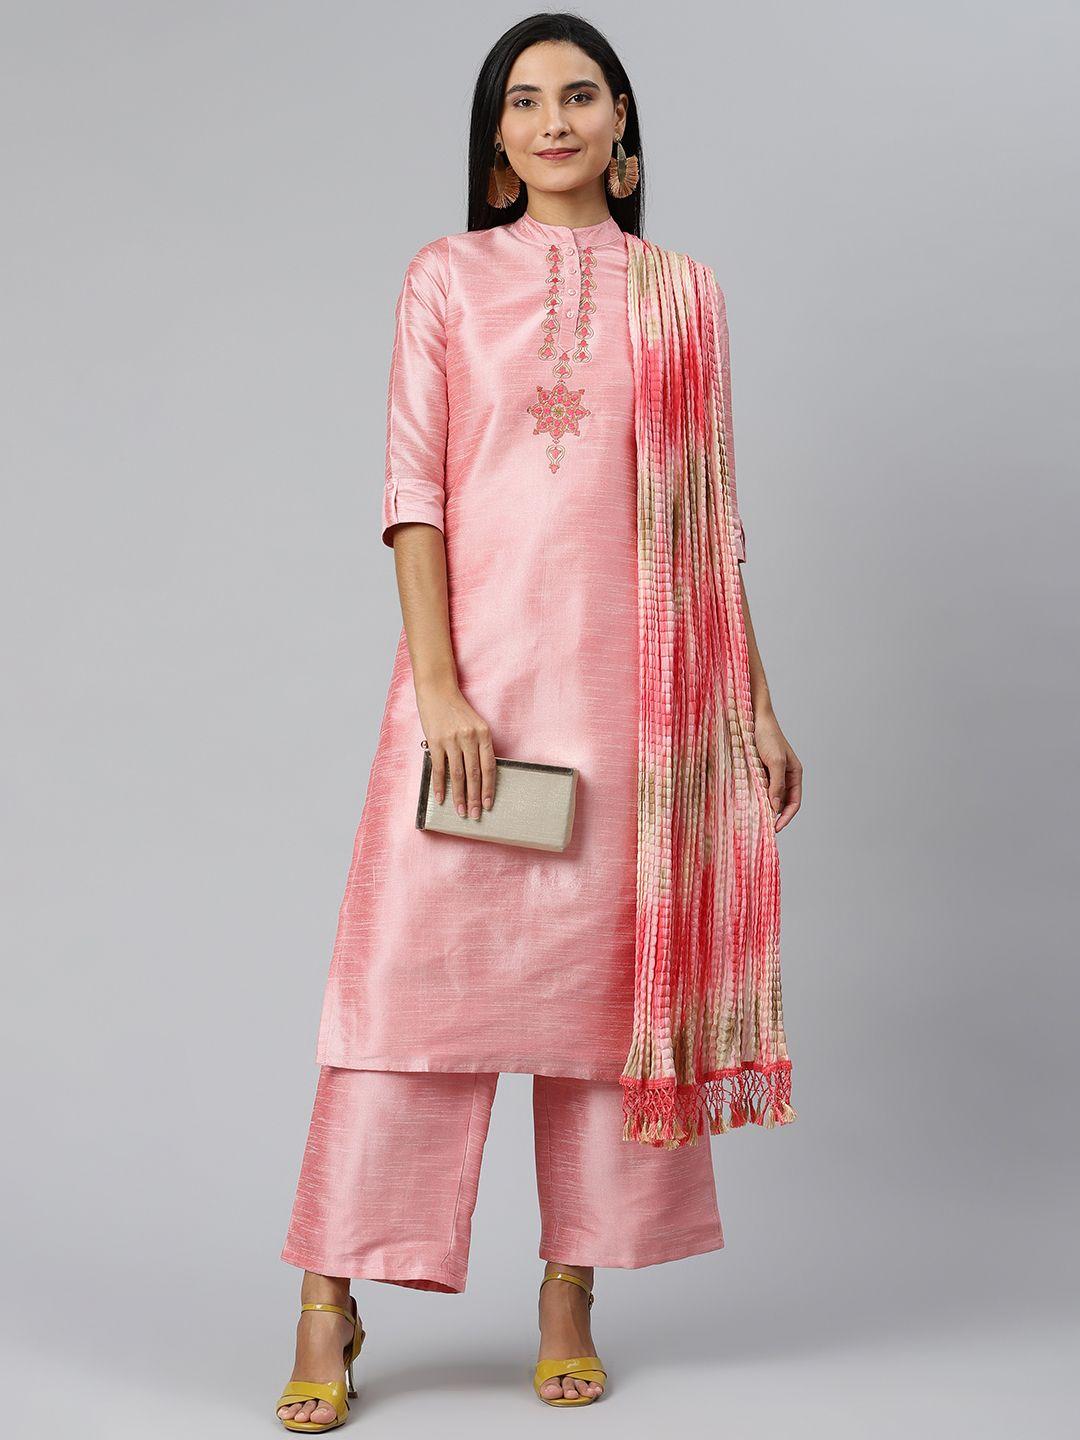 ives women pink ethnic motifs yoke design dupion silk kurta with palazzos & dupatta